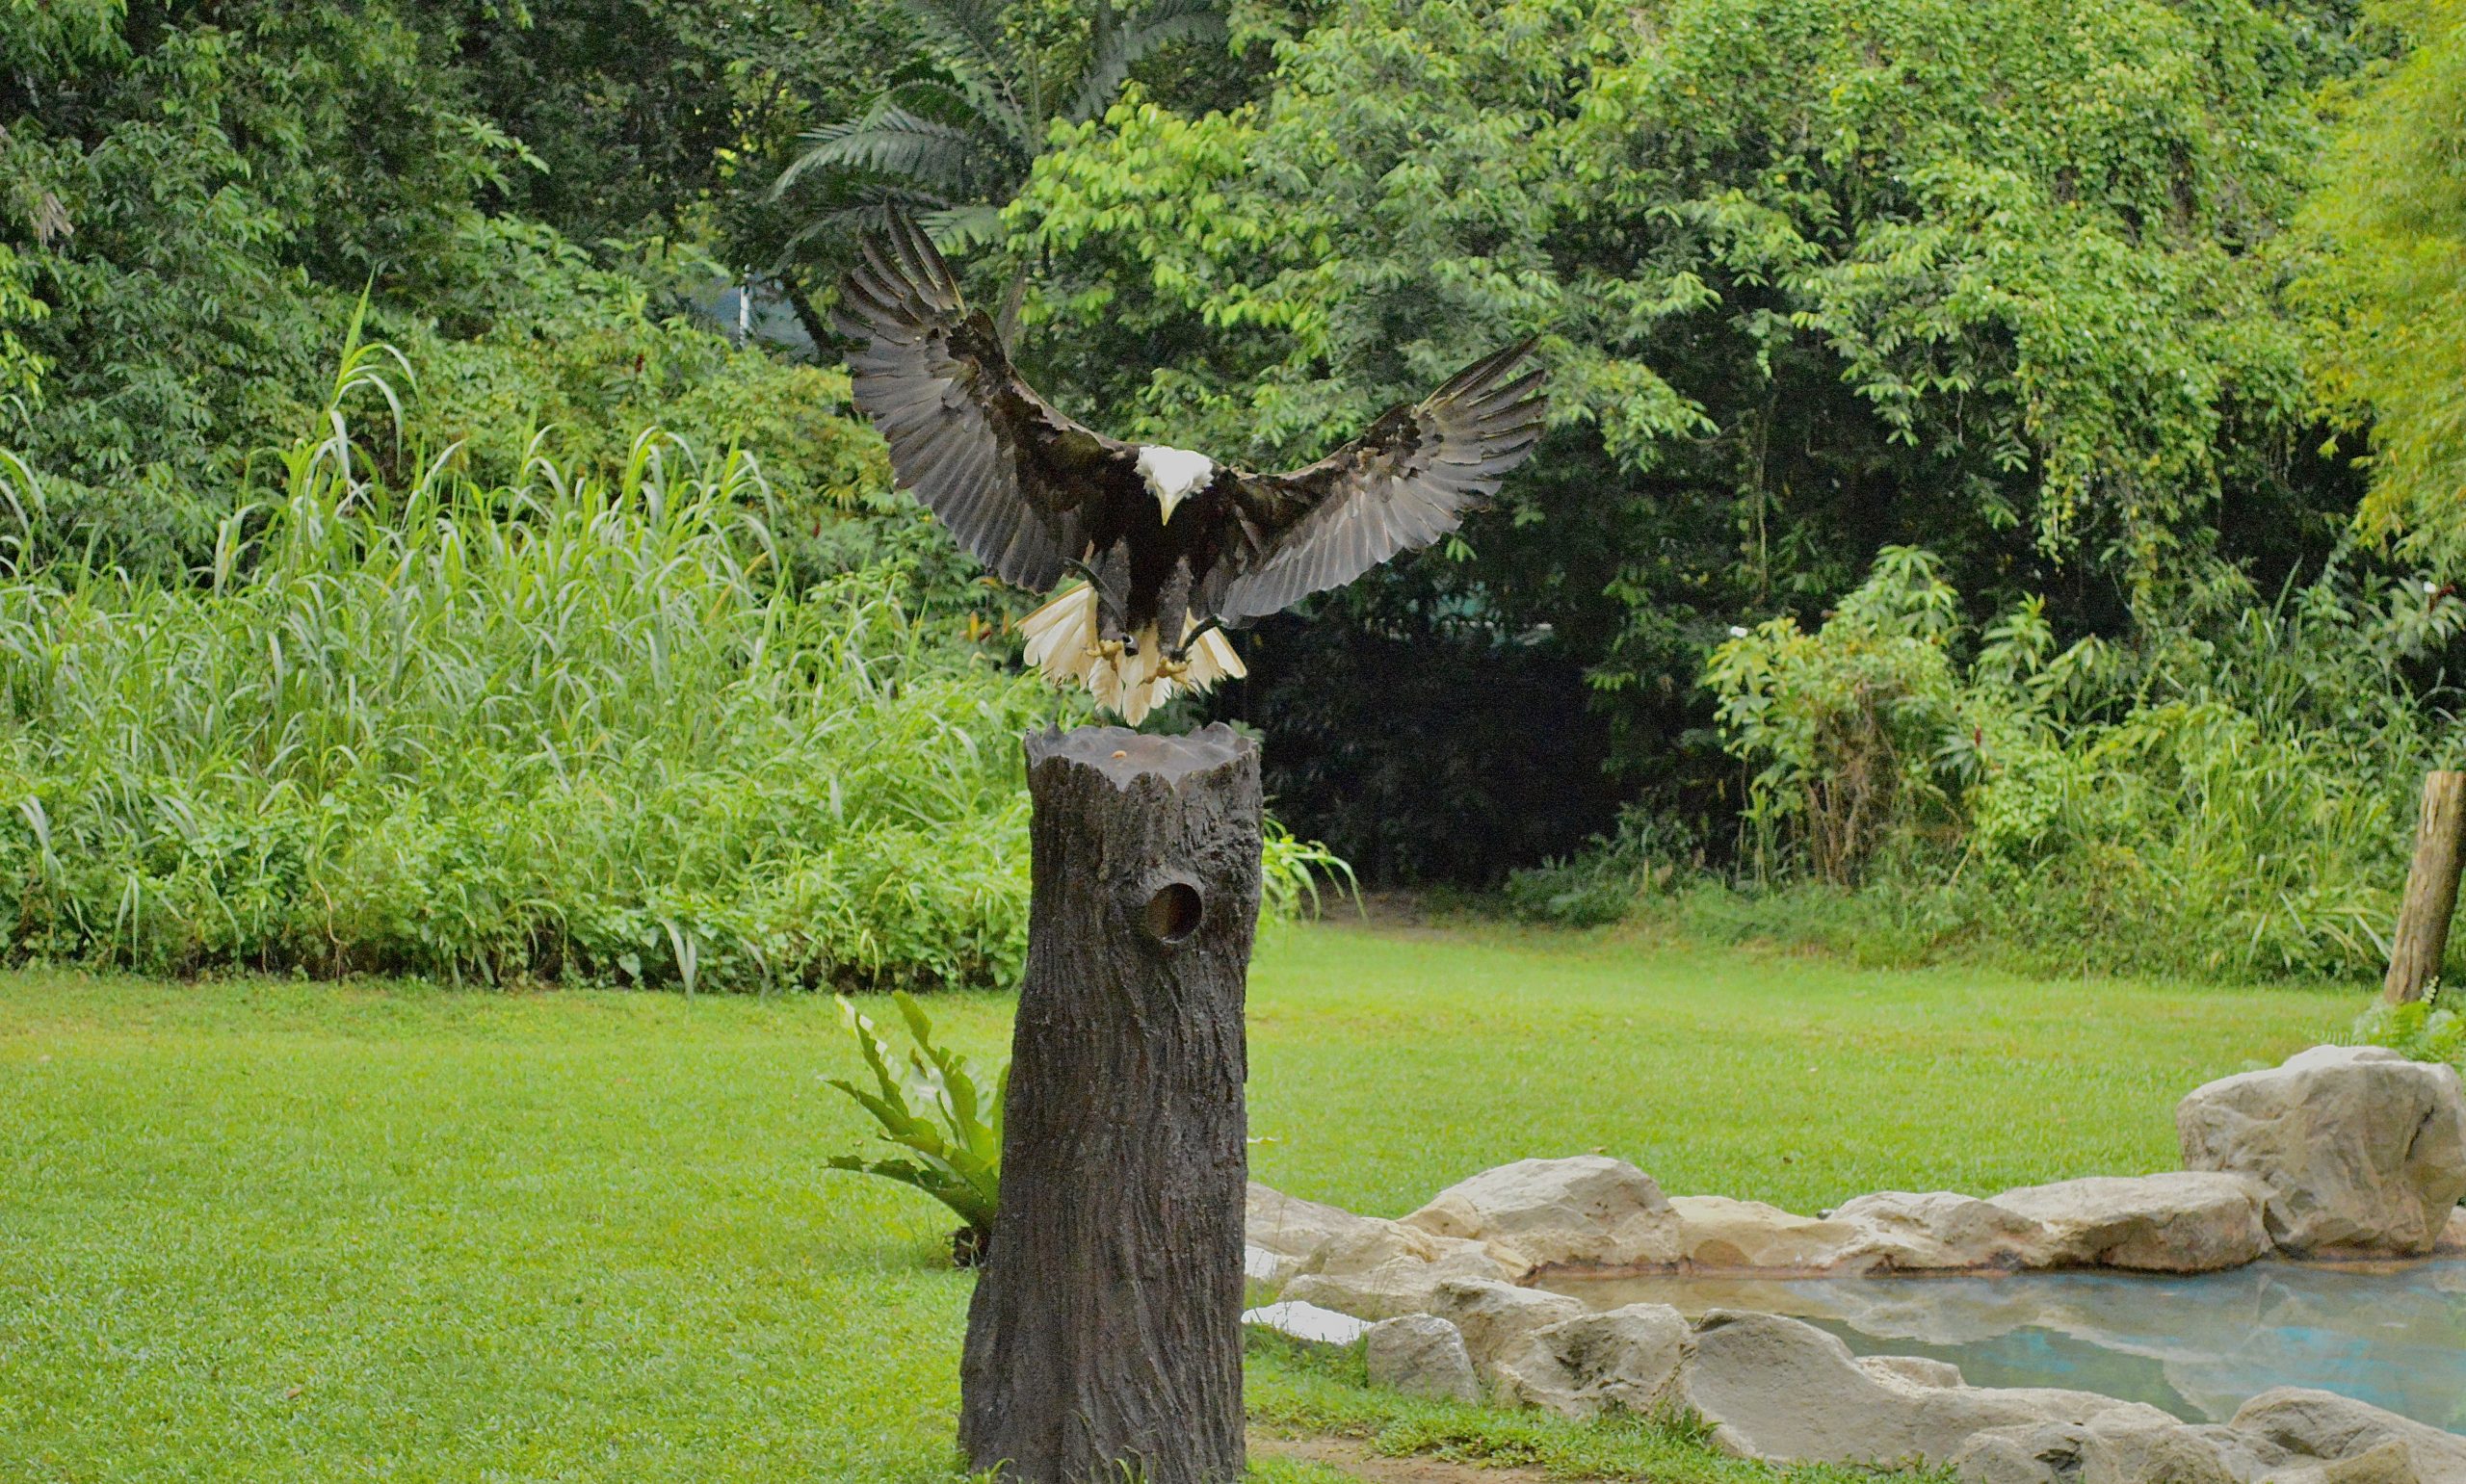 Eagle landing on wooden pole